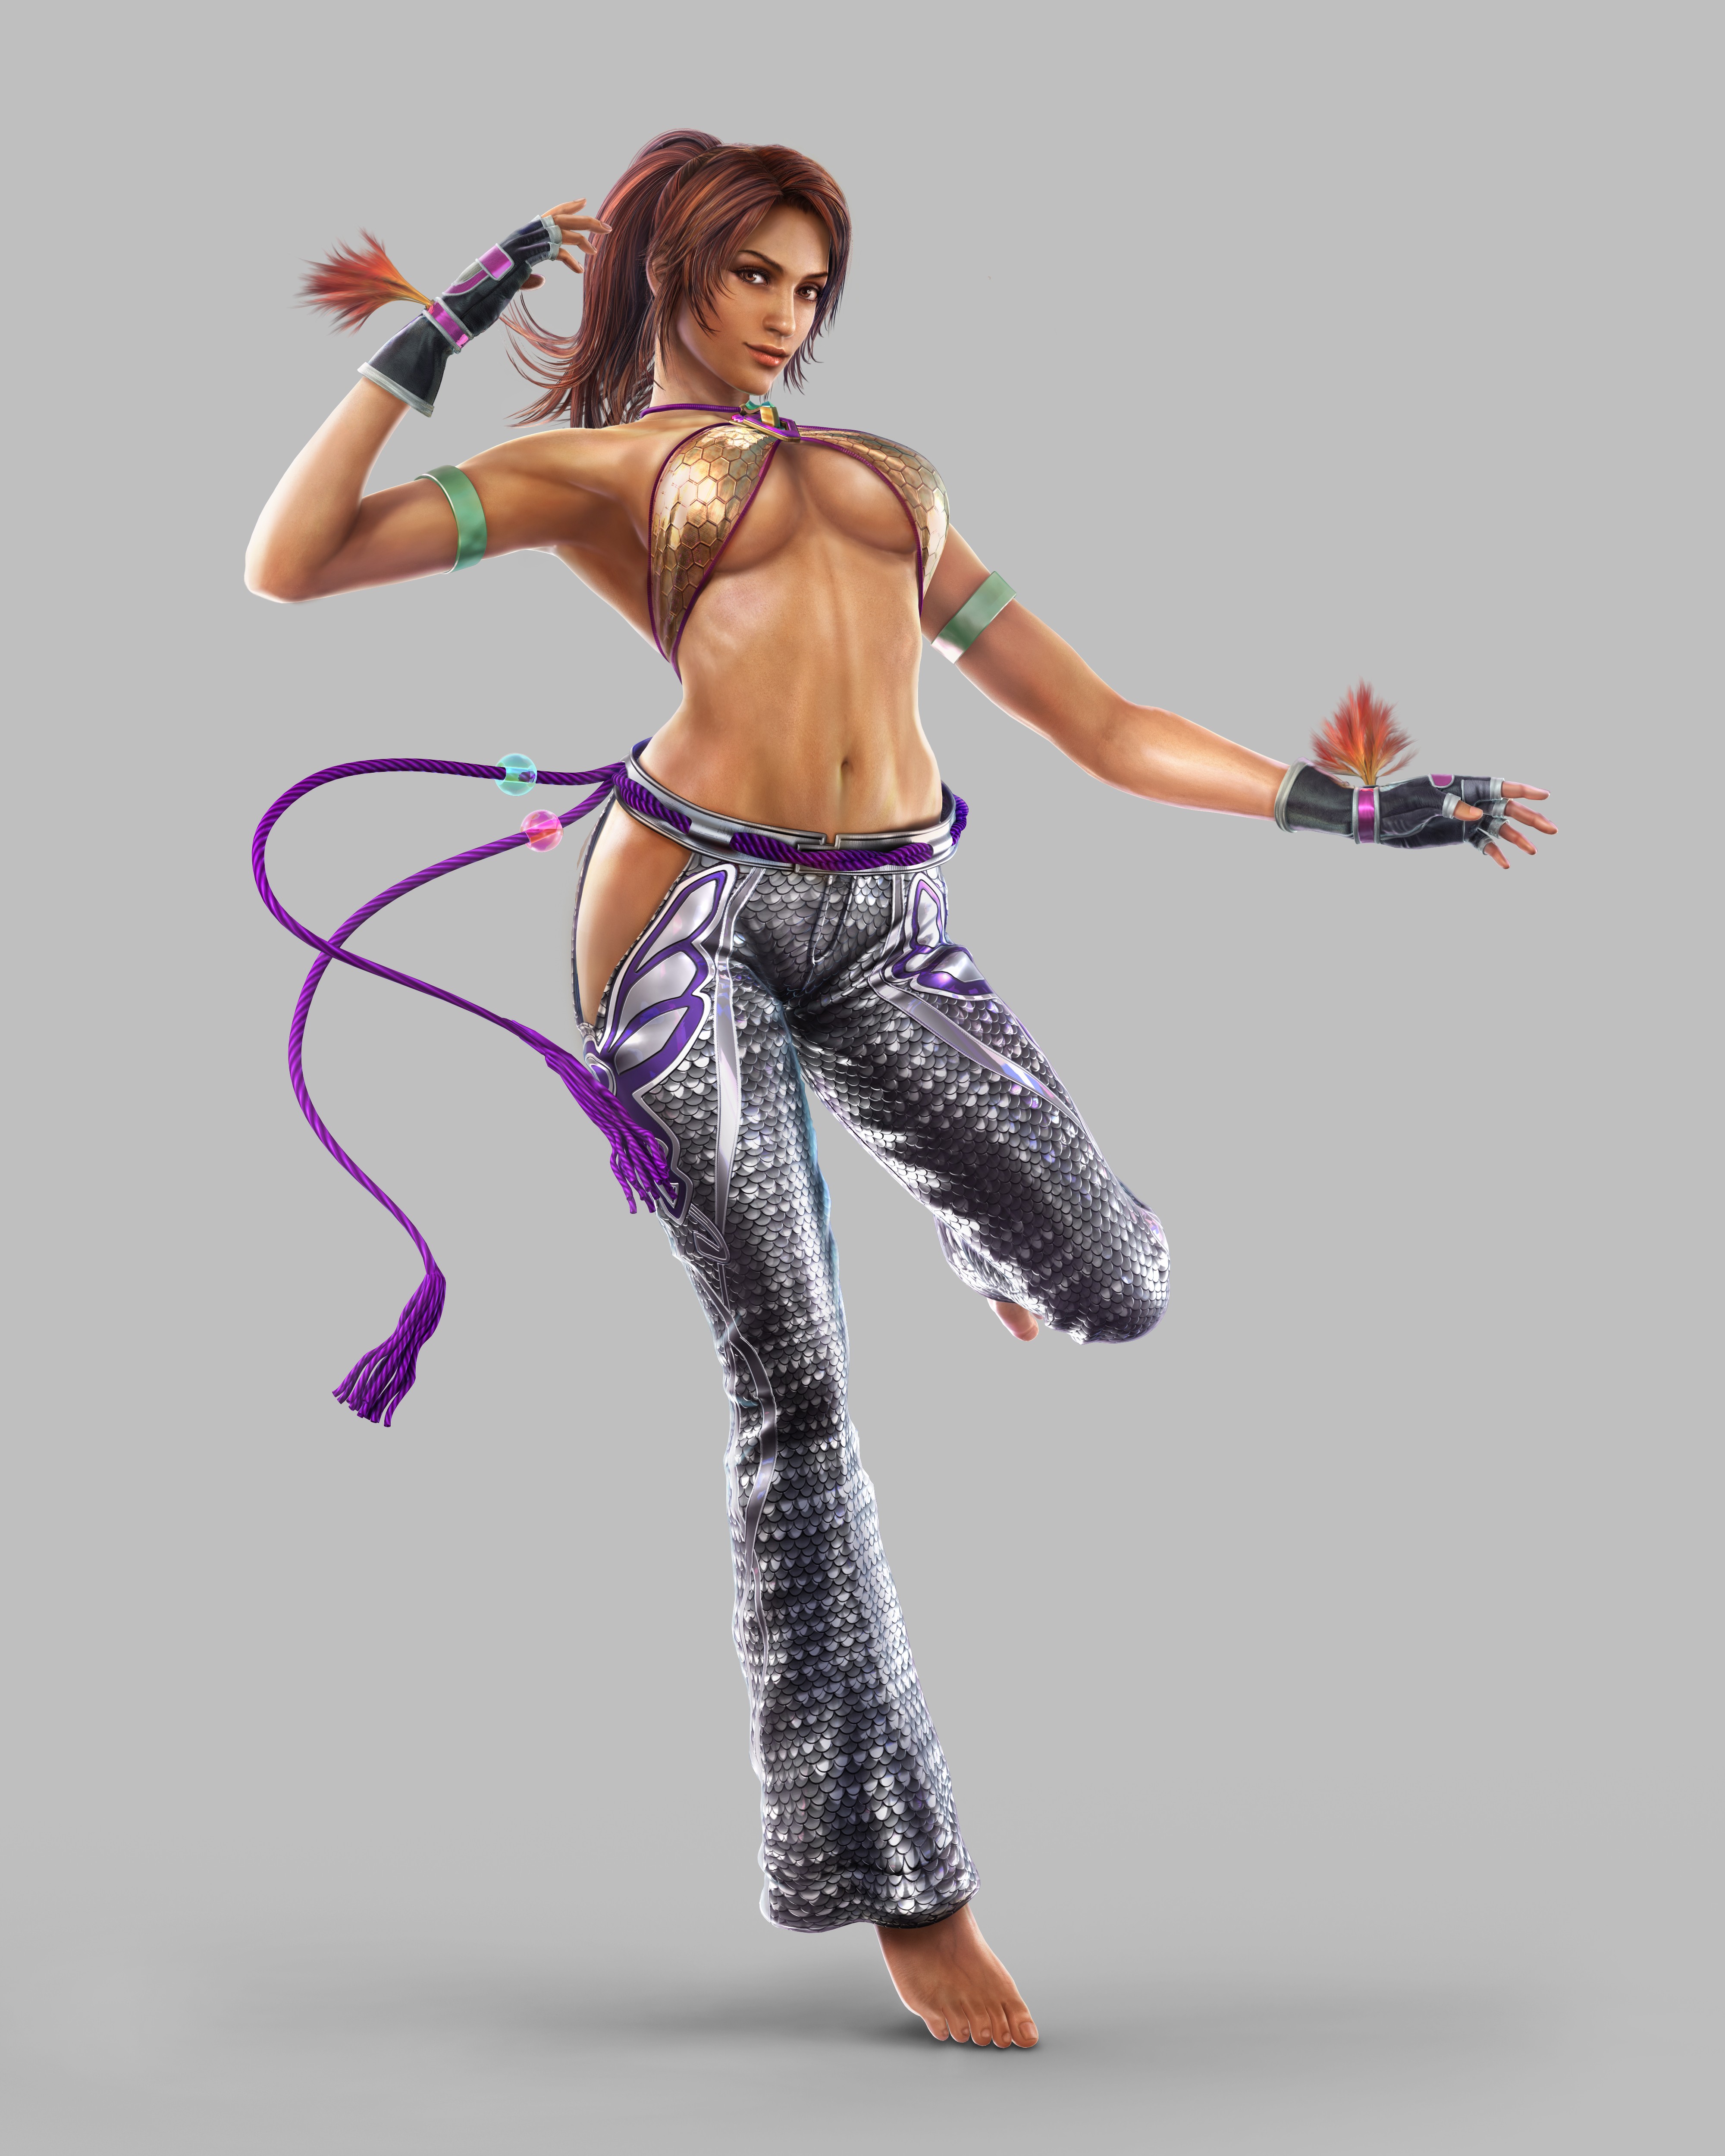 General 4000x5000 Tekken video games video game art video game girls Fighting Games video game warriors boobs big boobs belly curvy simple background